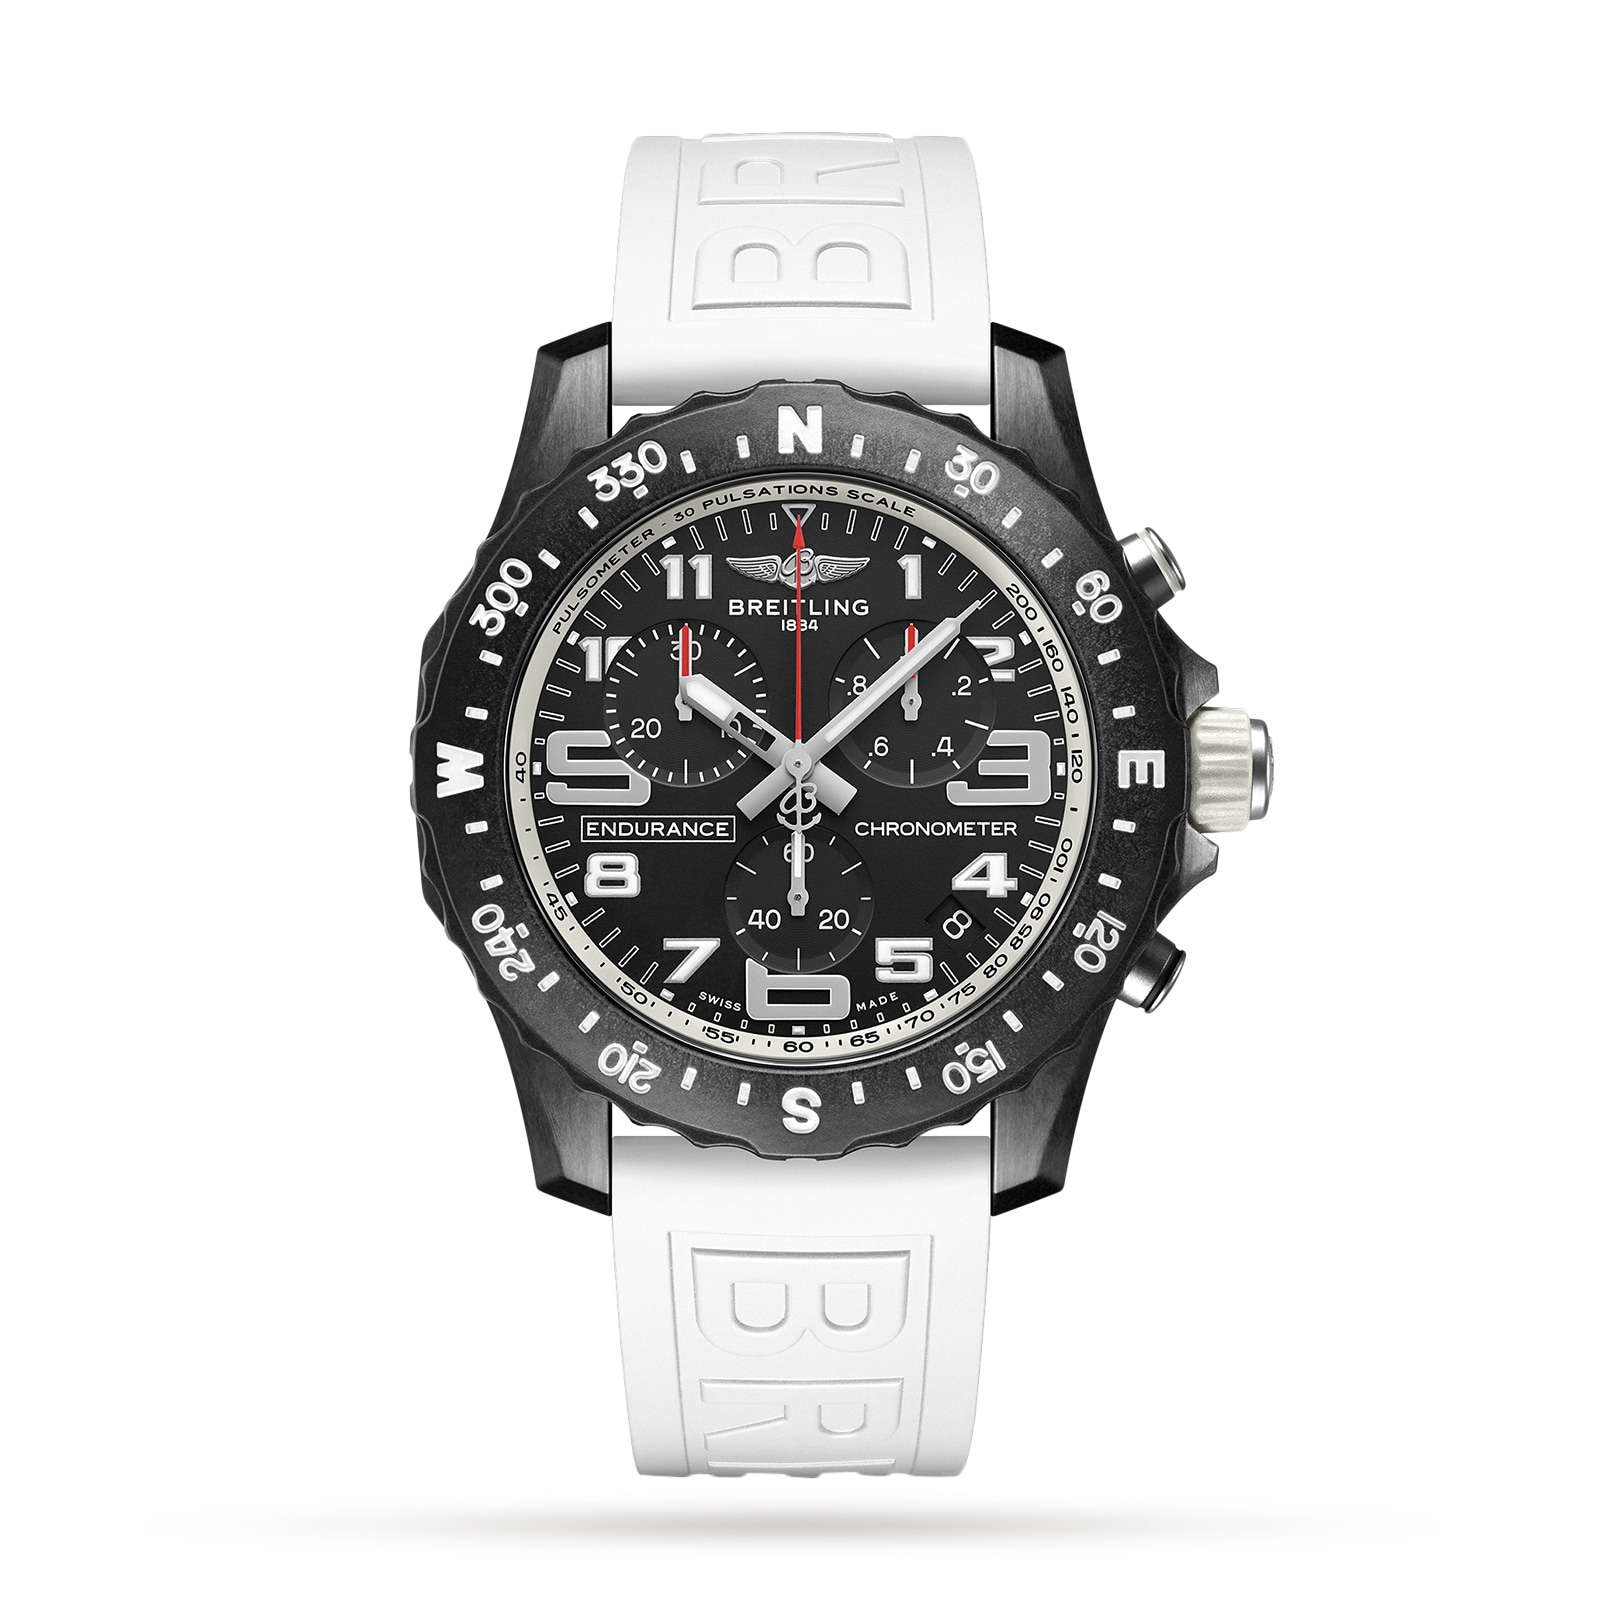 Casio G-Shock Resist G-300 Model 3750 Watch Casual Athleisure Office WORKS  | eBay